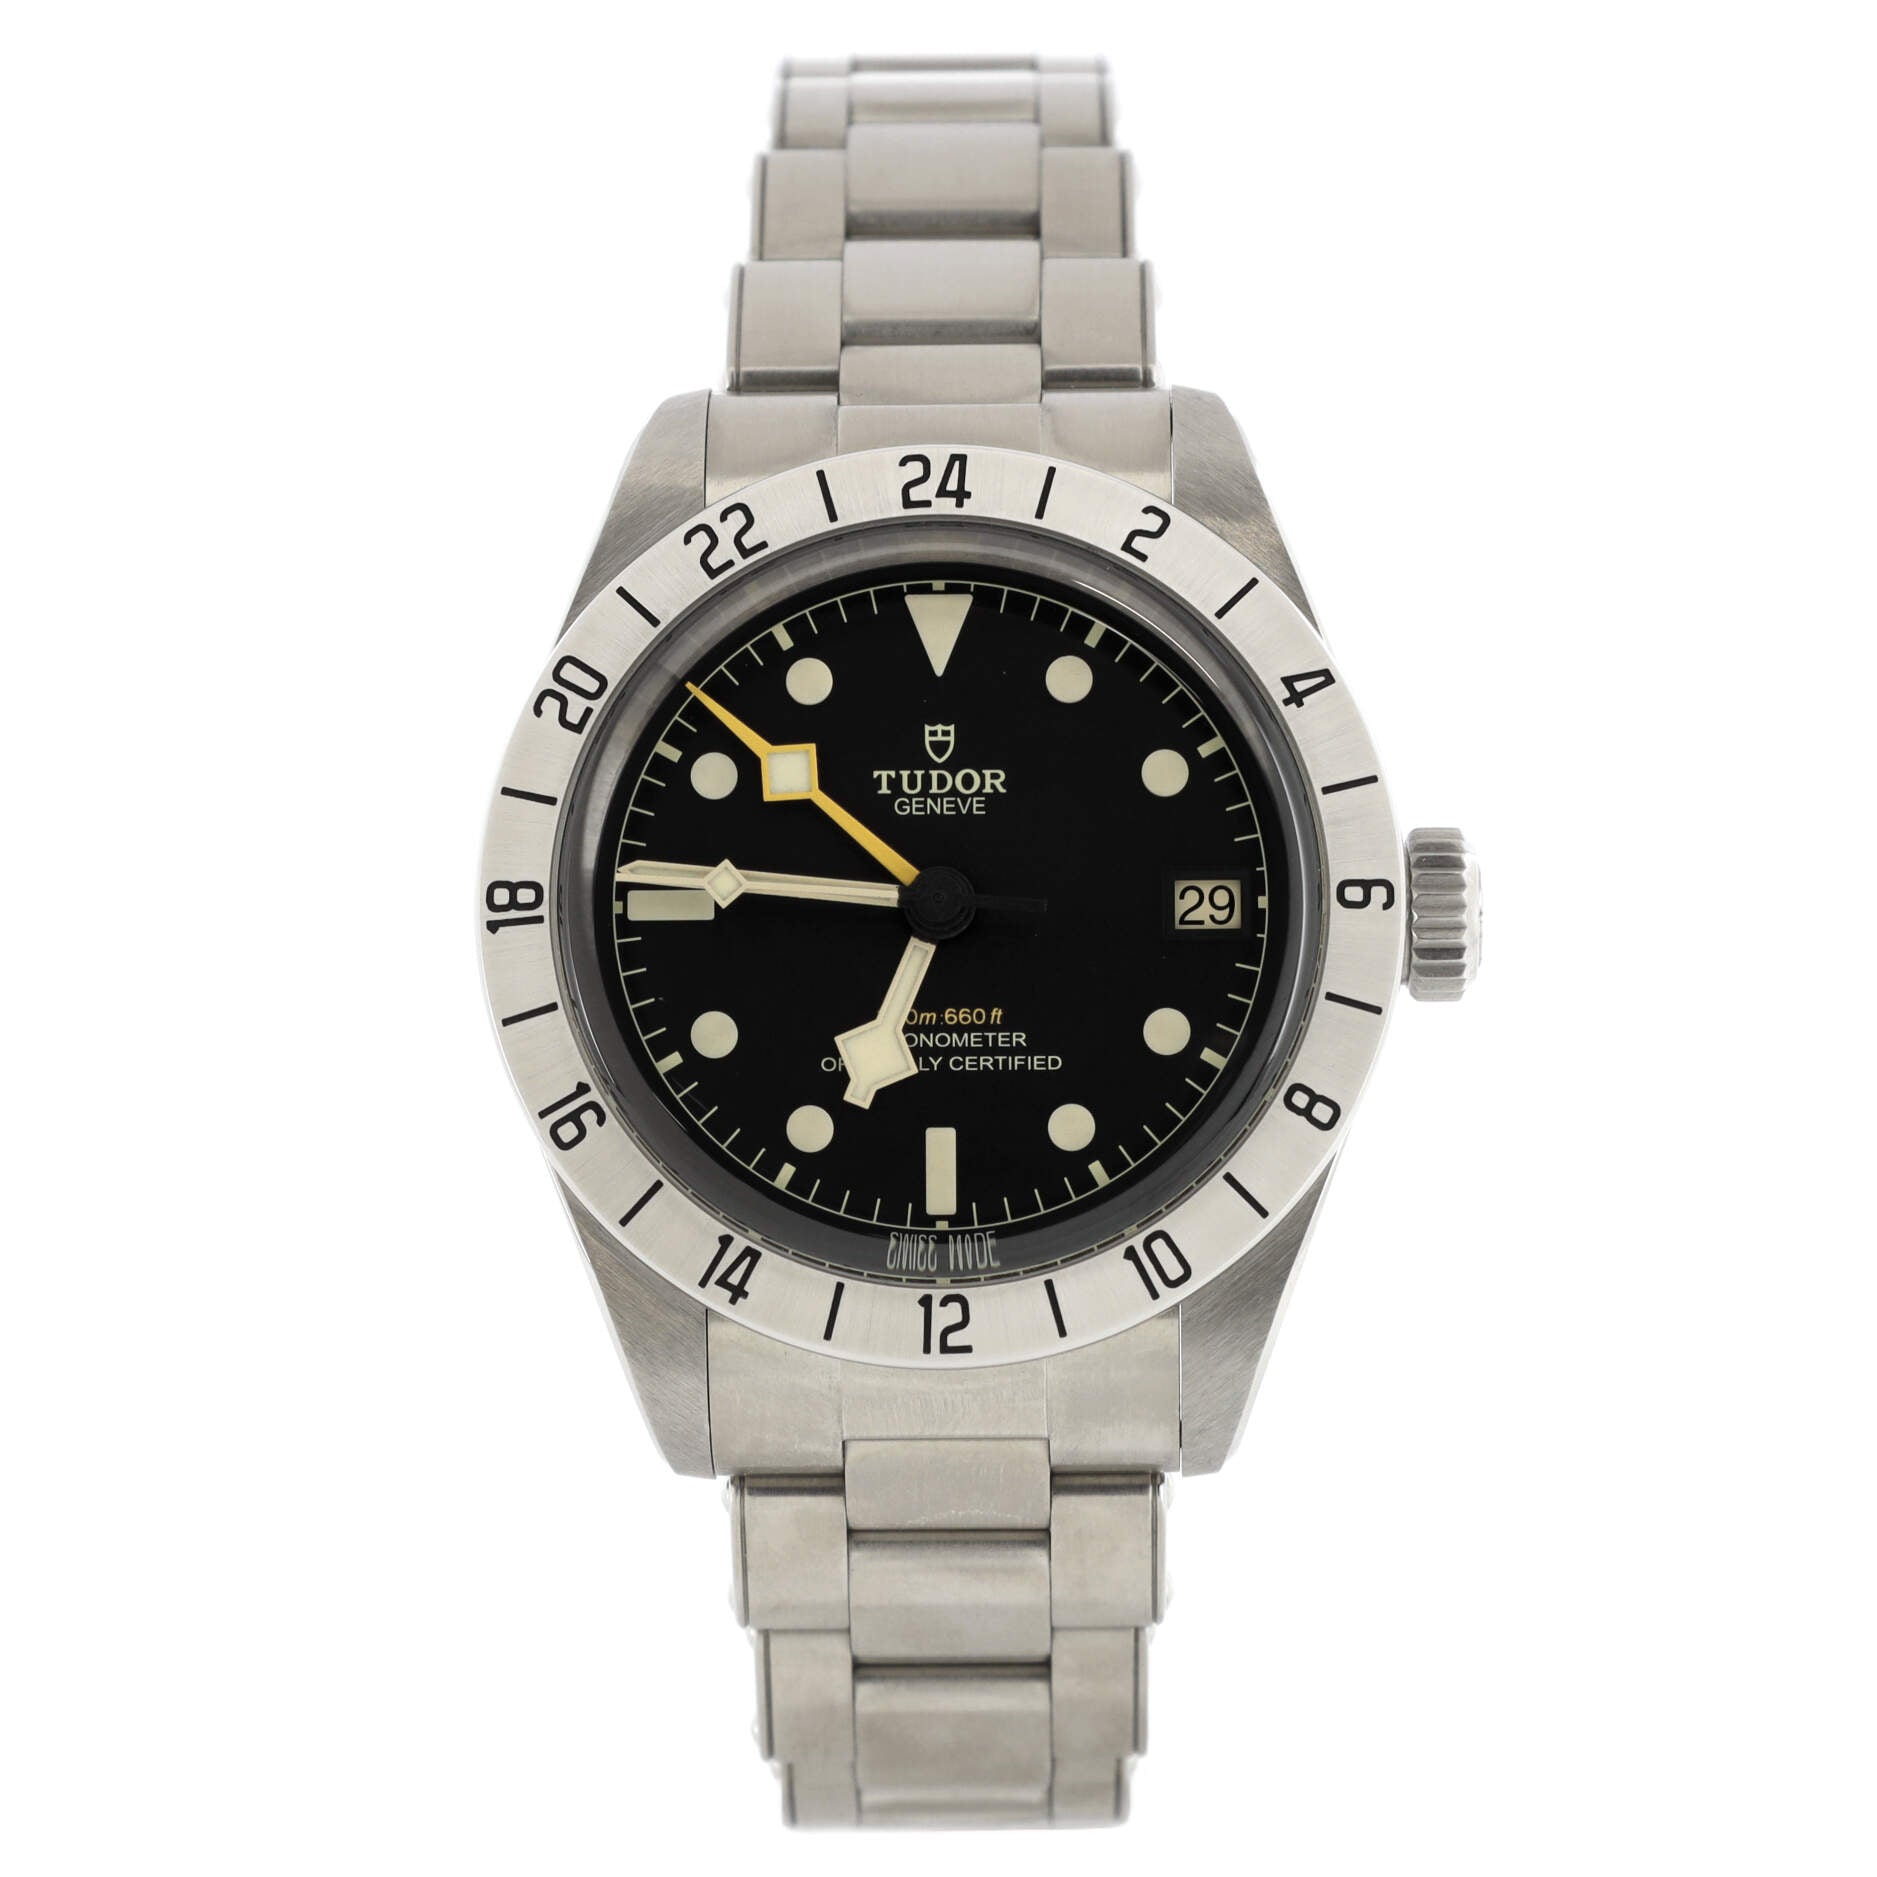 Heritage Black Bay Pro Automatic Watch (79470)